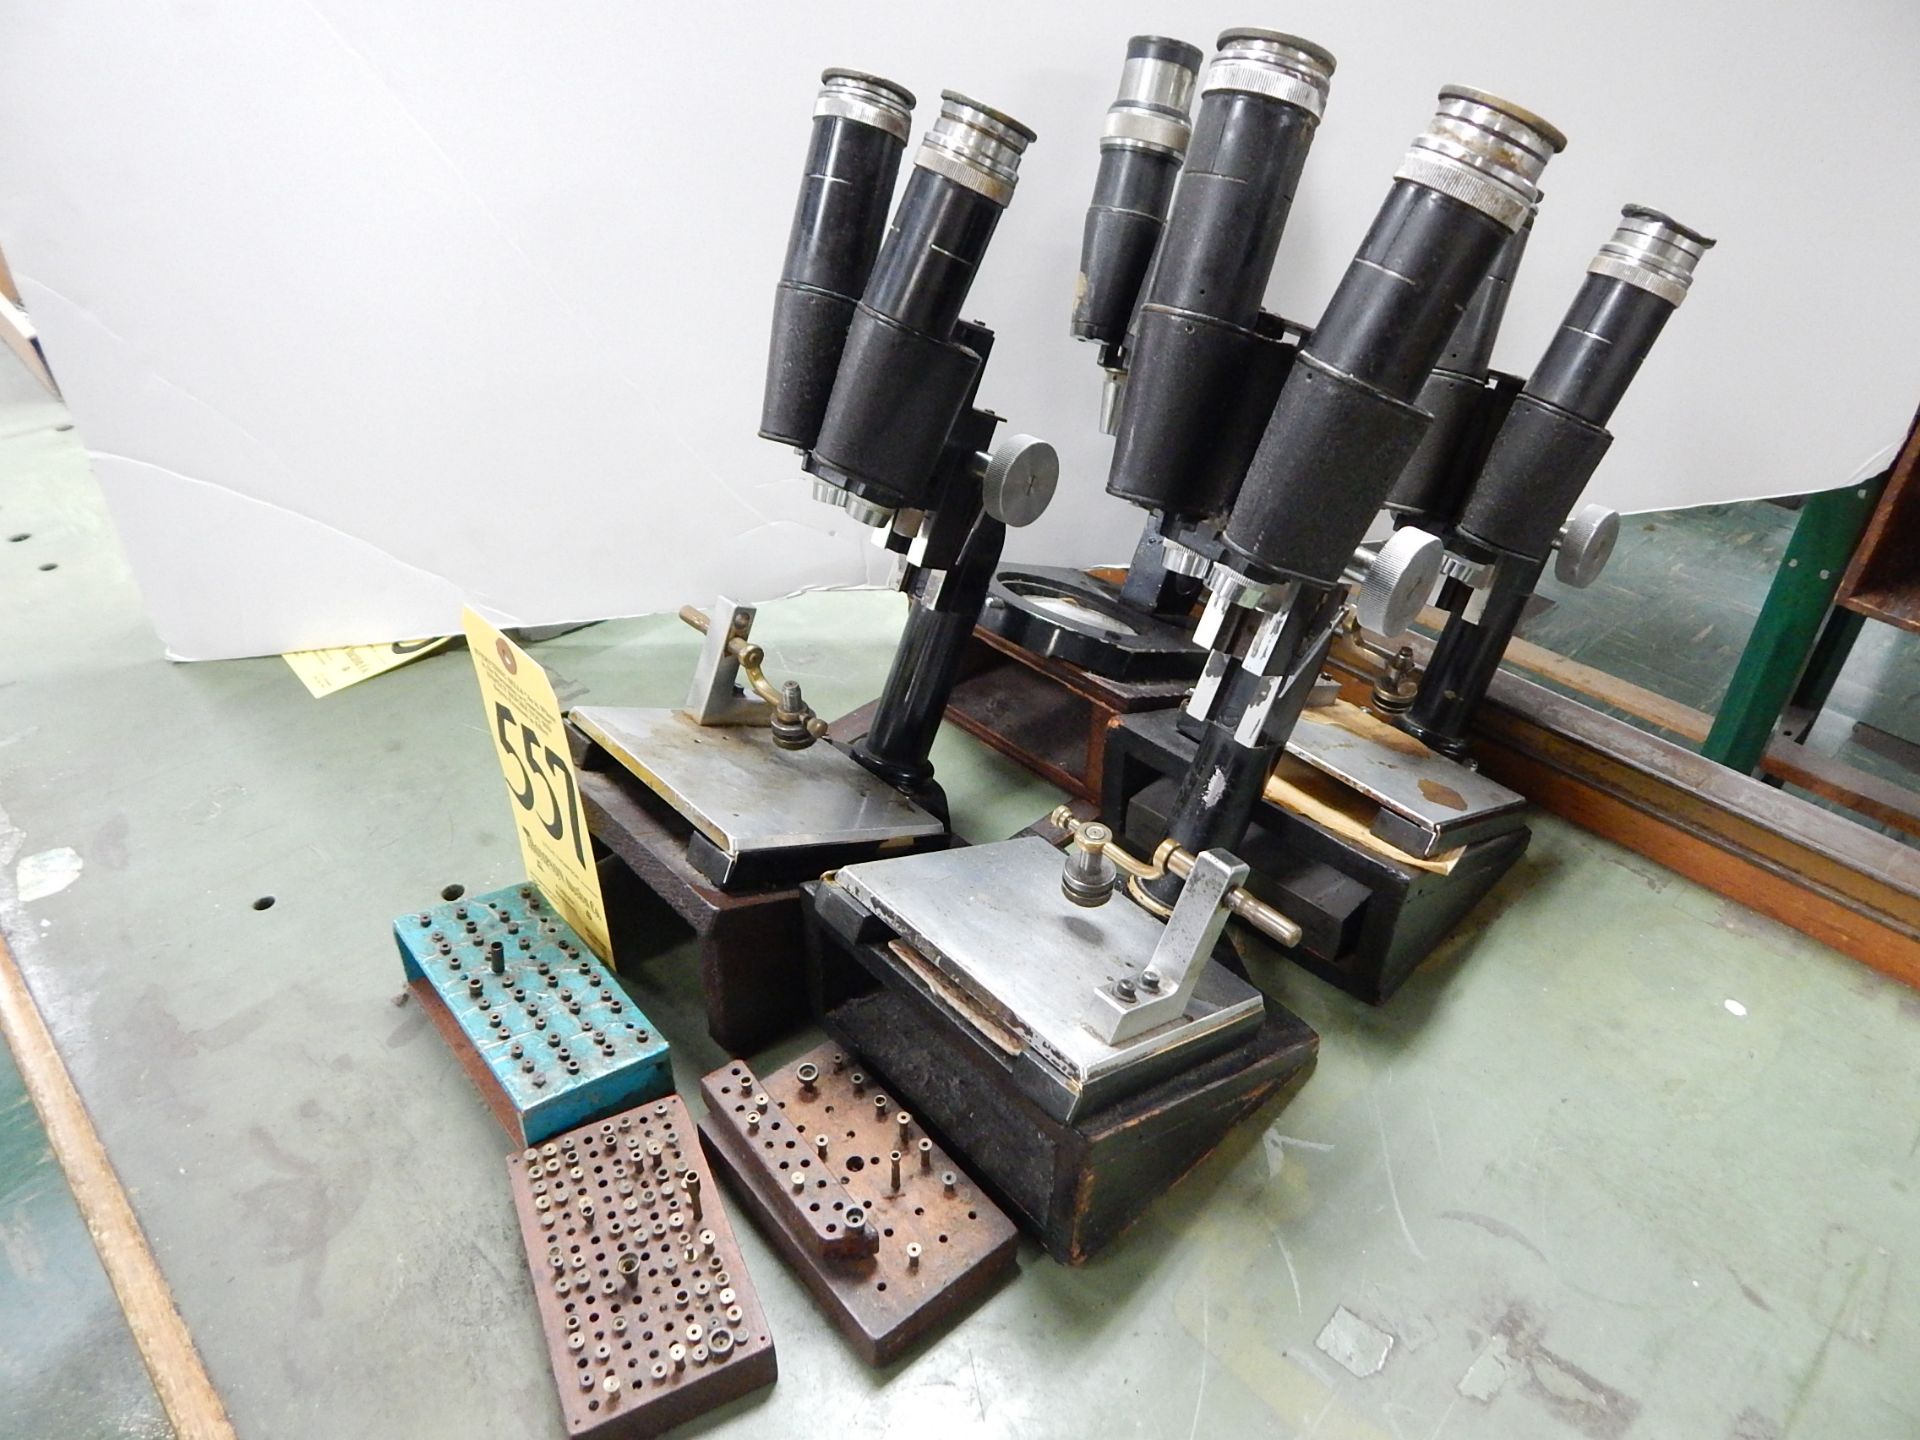 (4) Leitz Wetzlar Microscopes